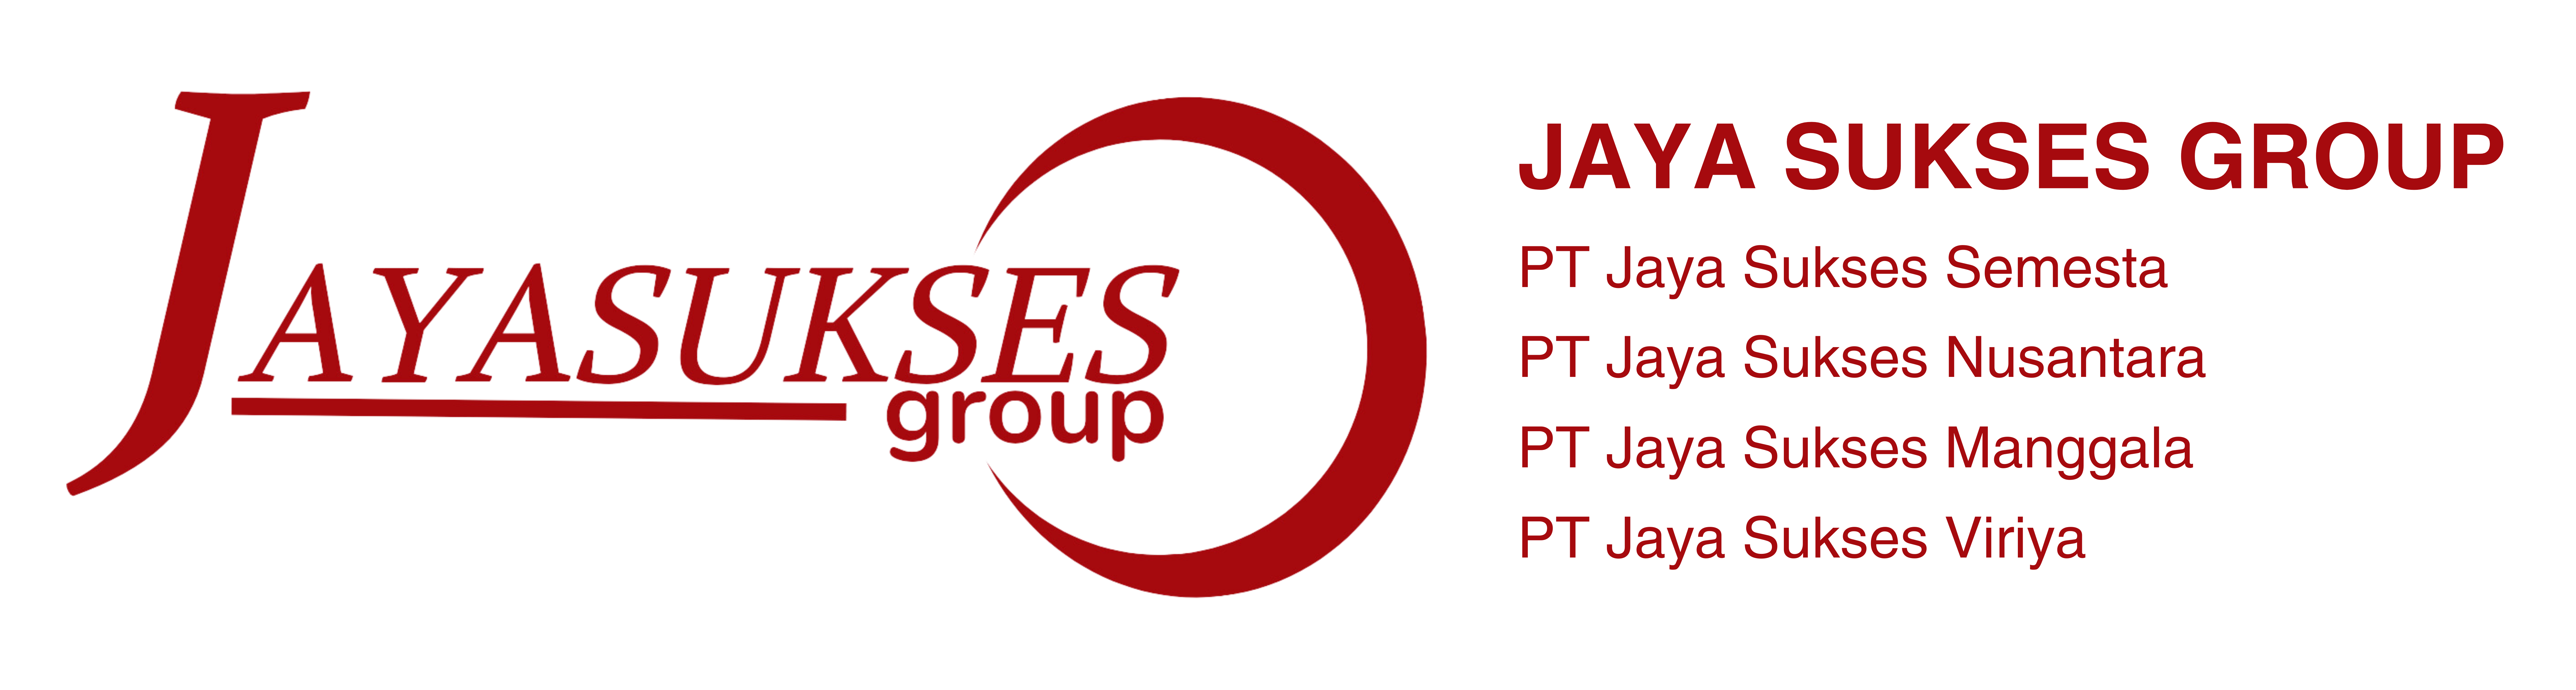 Jaya Sukses Group Logo Text